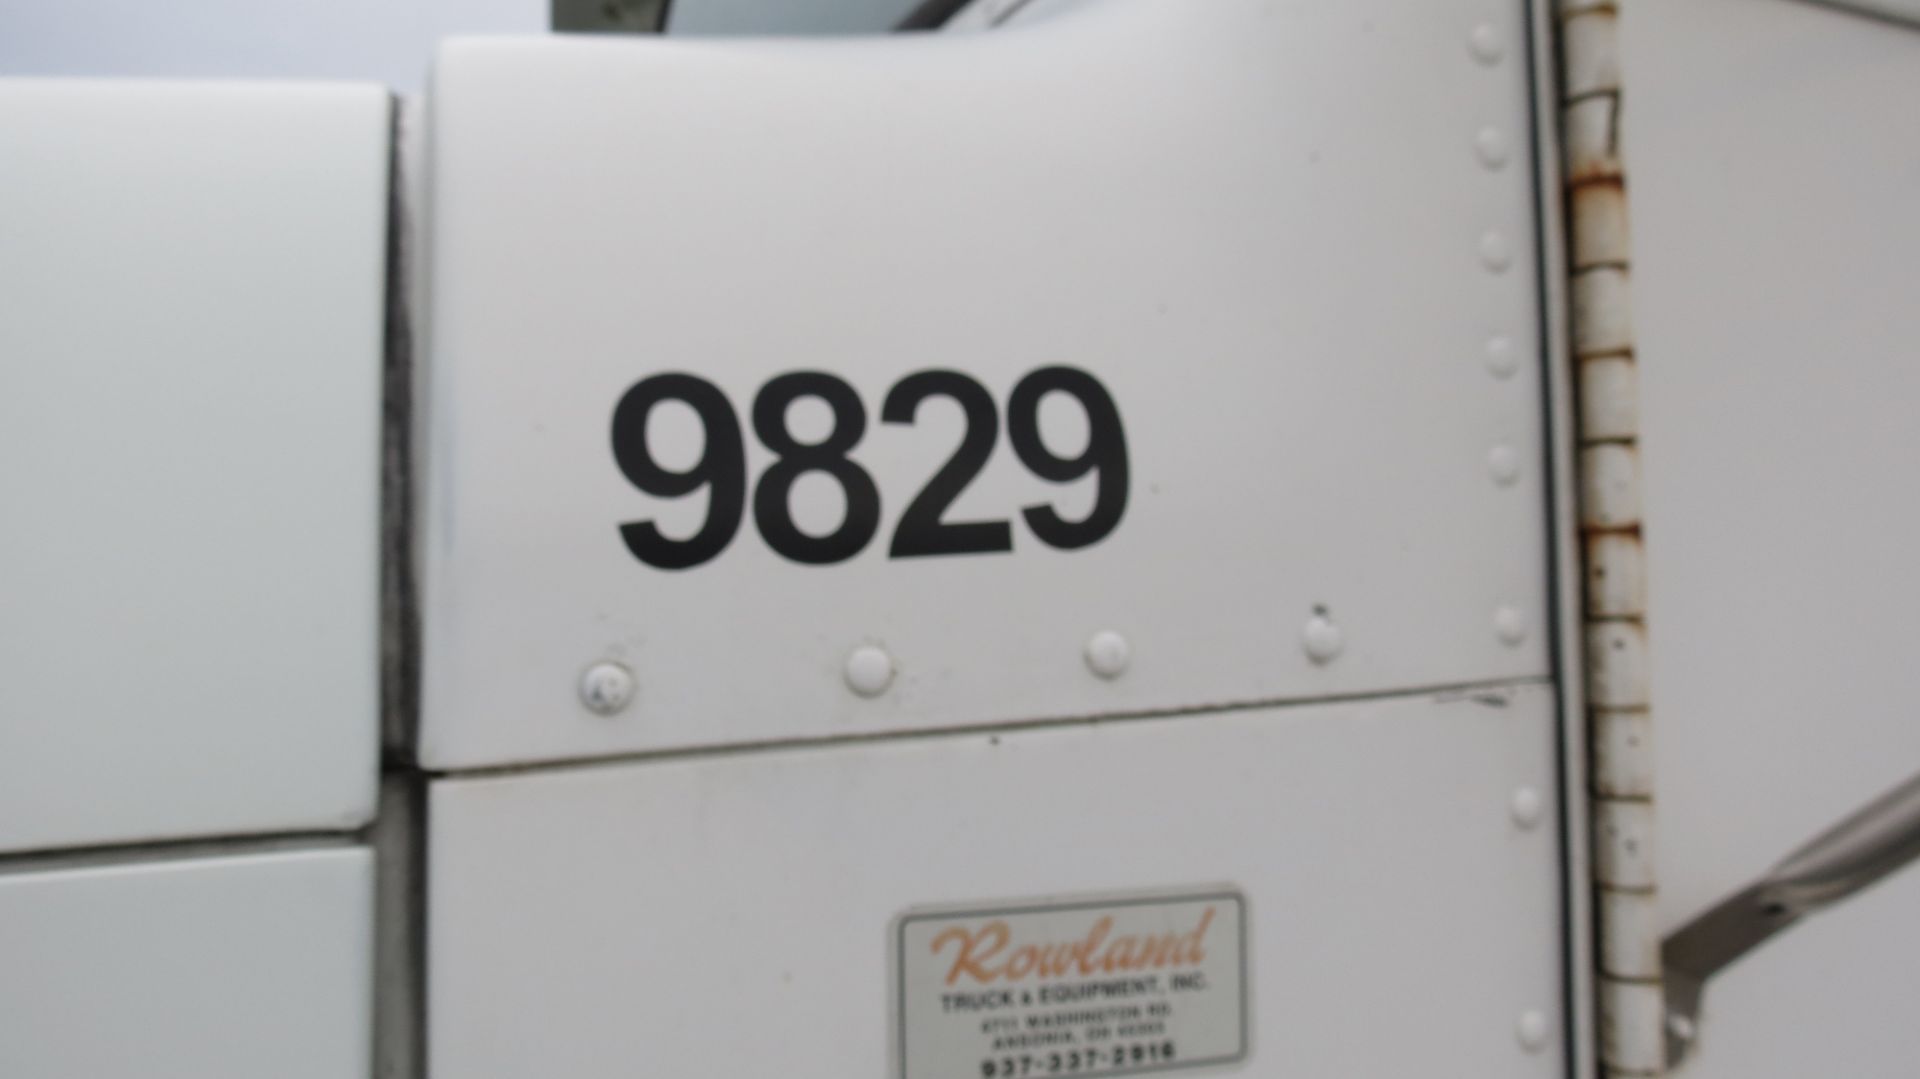 1998 Freightliner, day cab, air ride, Cummins M-11, Eaton 9-speed trans, 168” wheelbase, 523,830 mi - Image 24 of 51